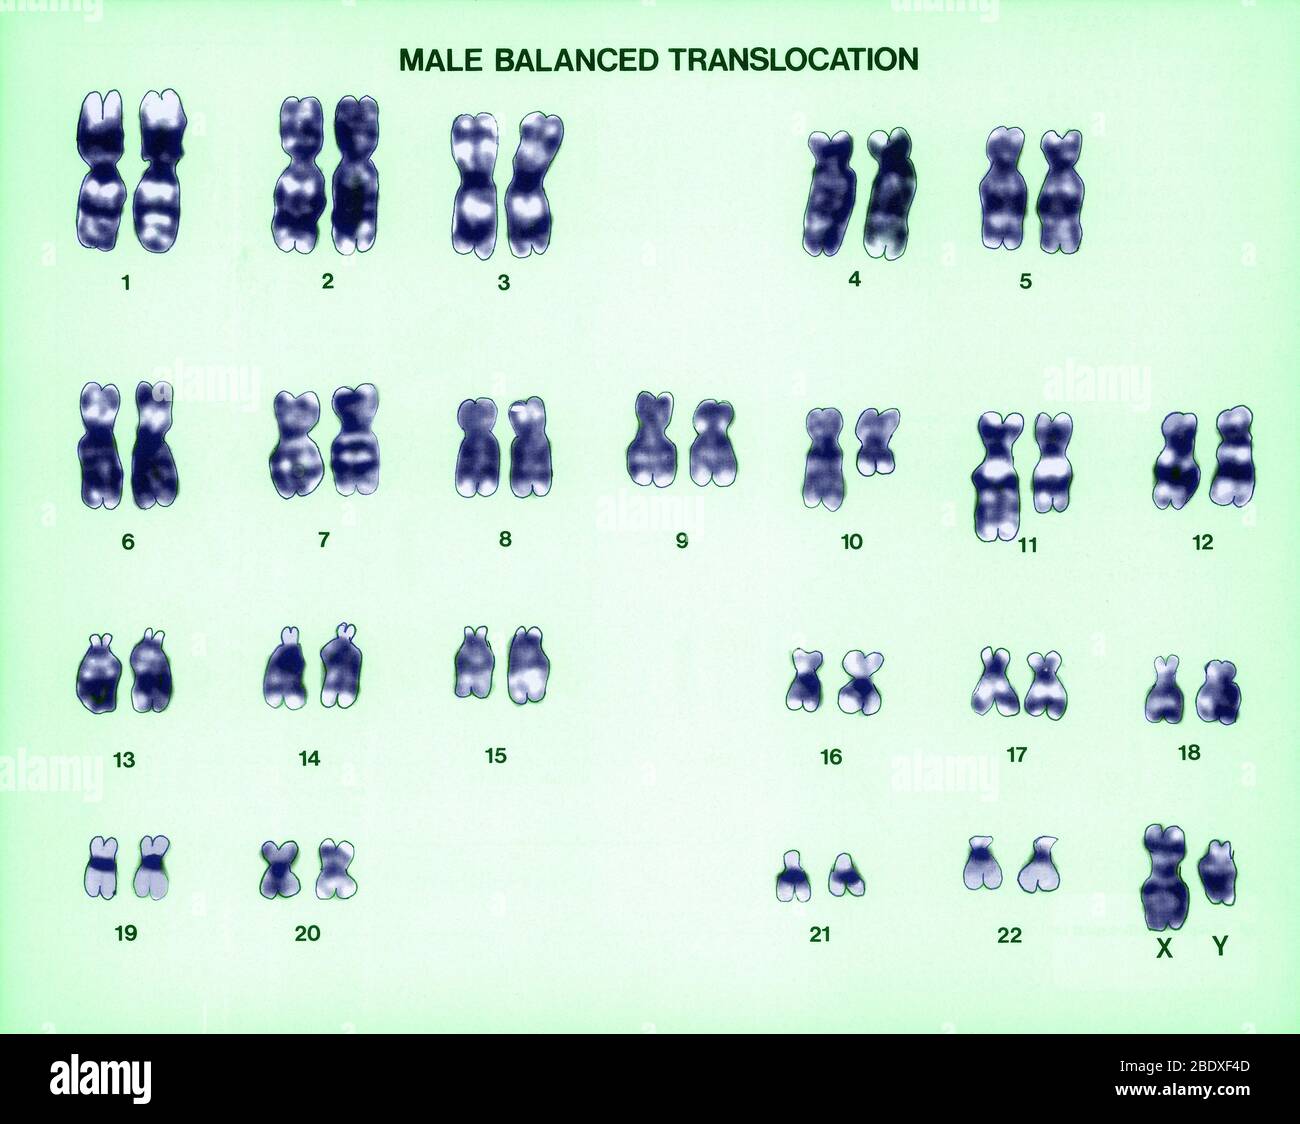 Male Balanced Translocation Karyotype Stock Photo